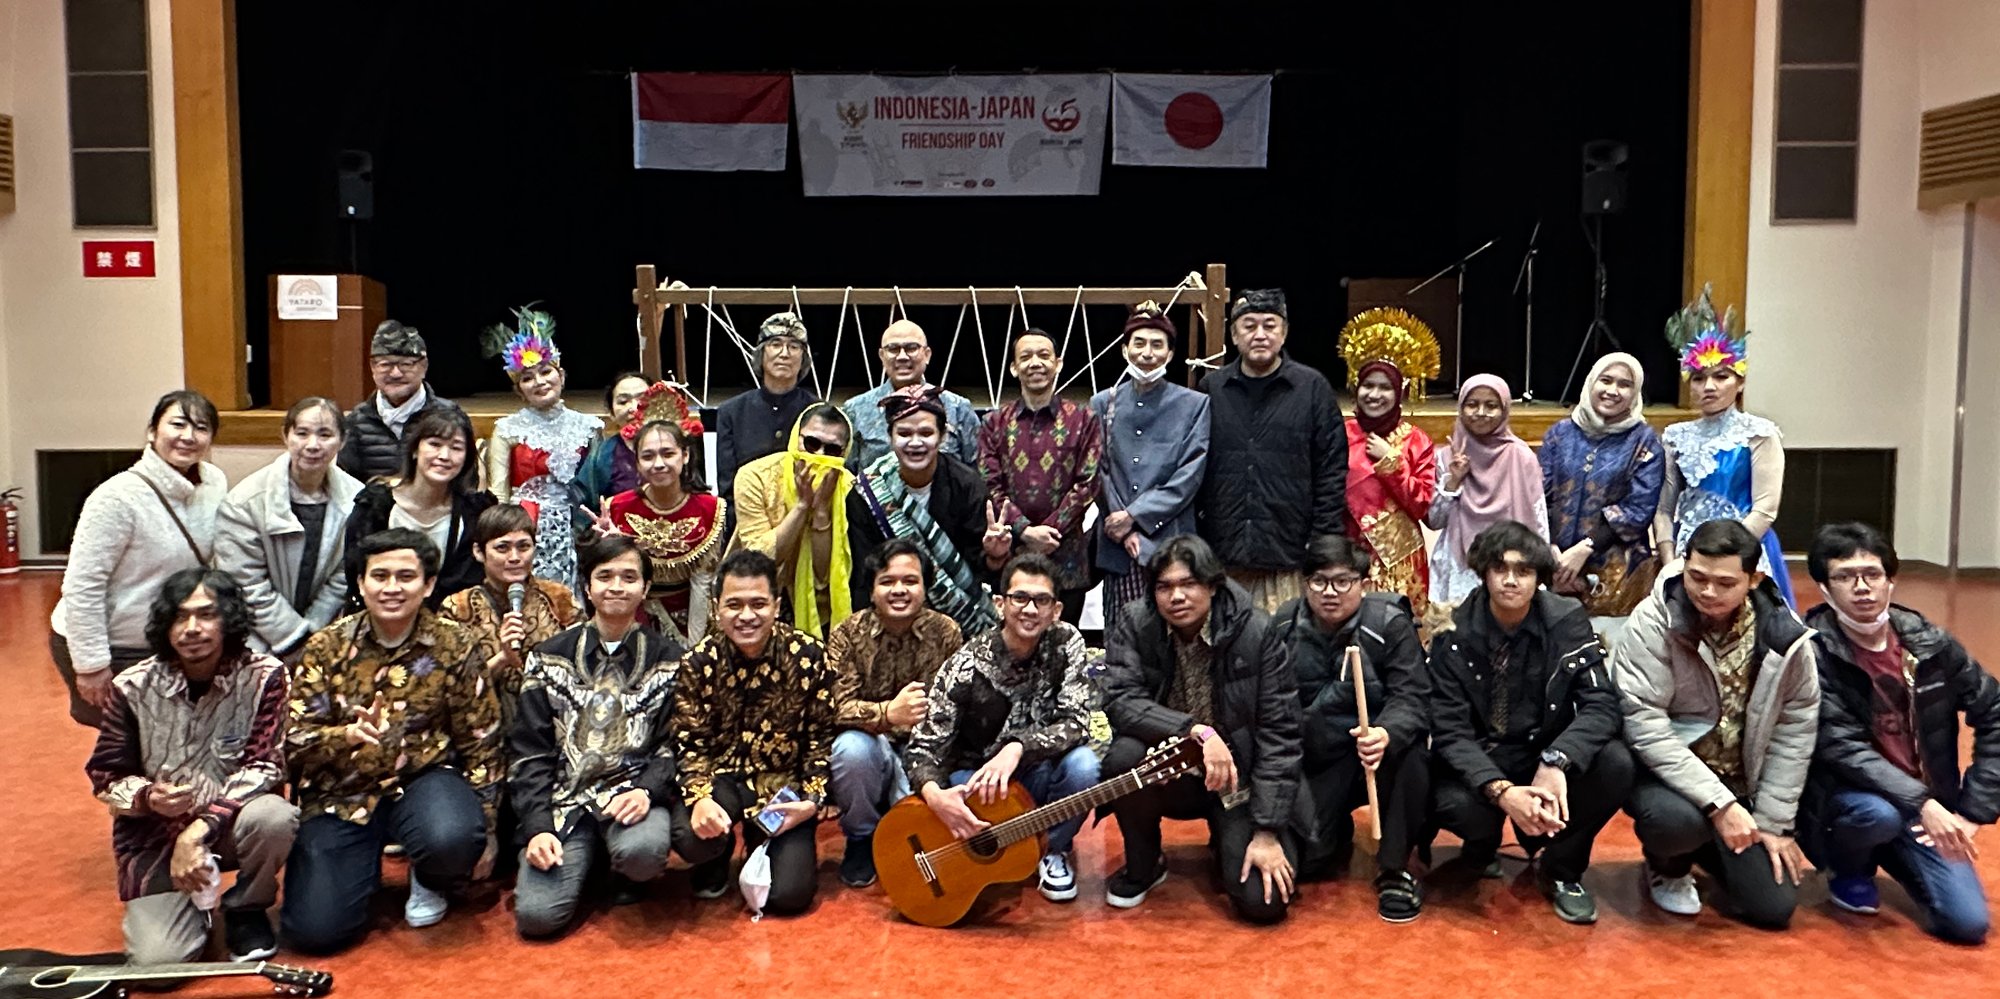 Indonesia Japan Friendship Day (Kementerian Luar Negeri